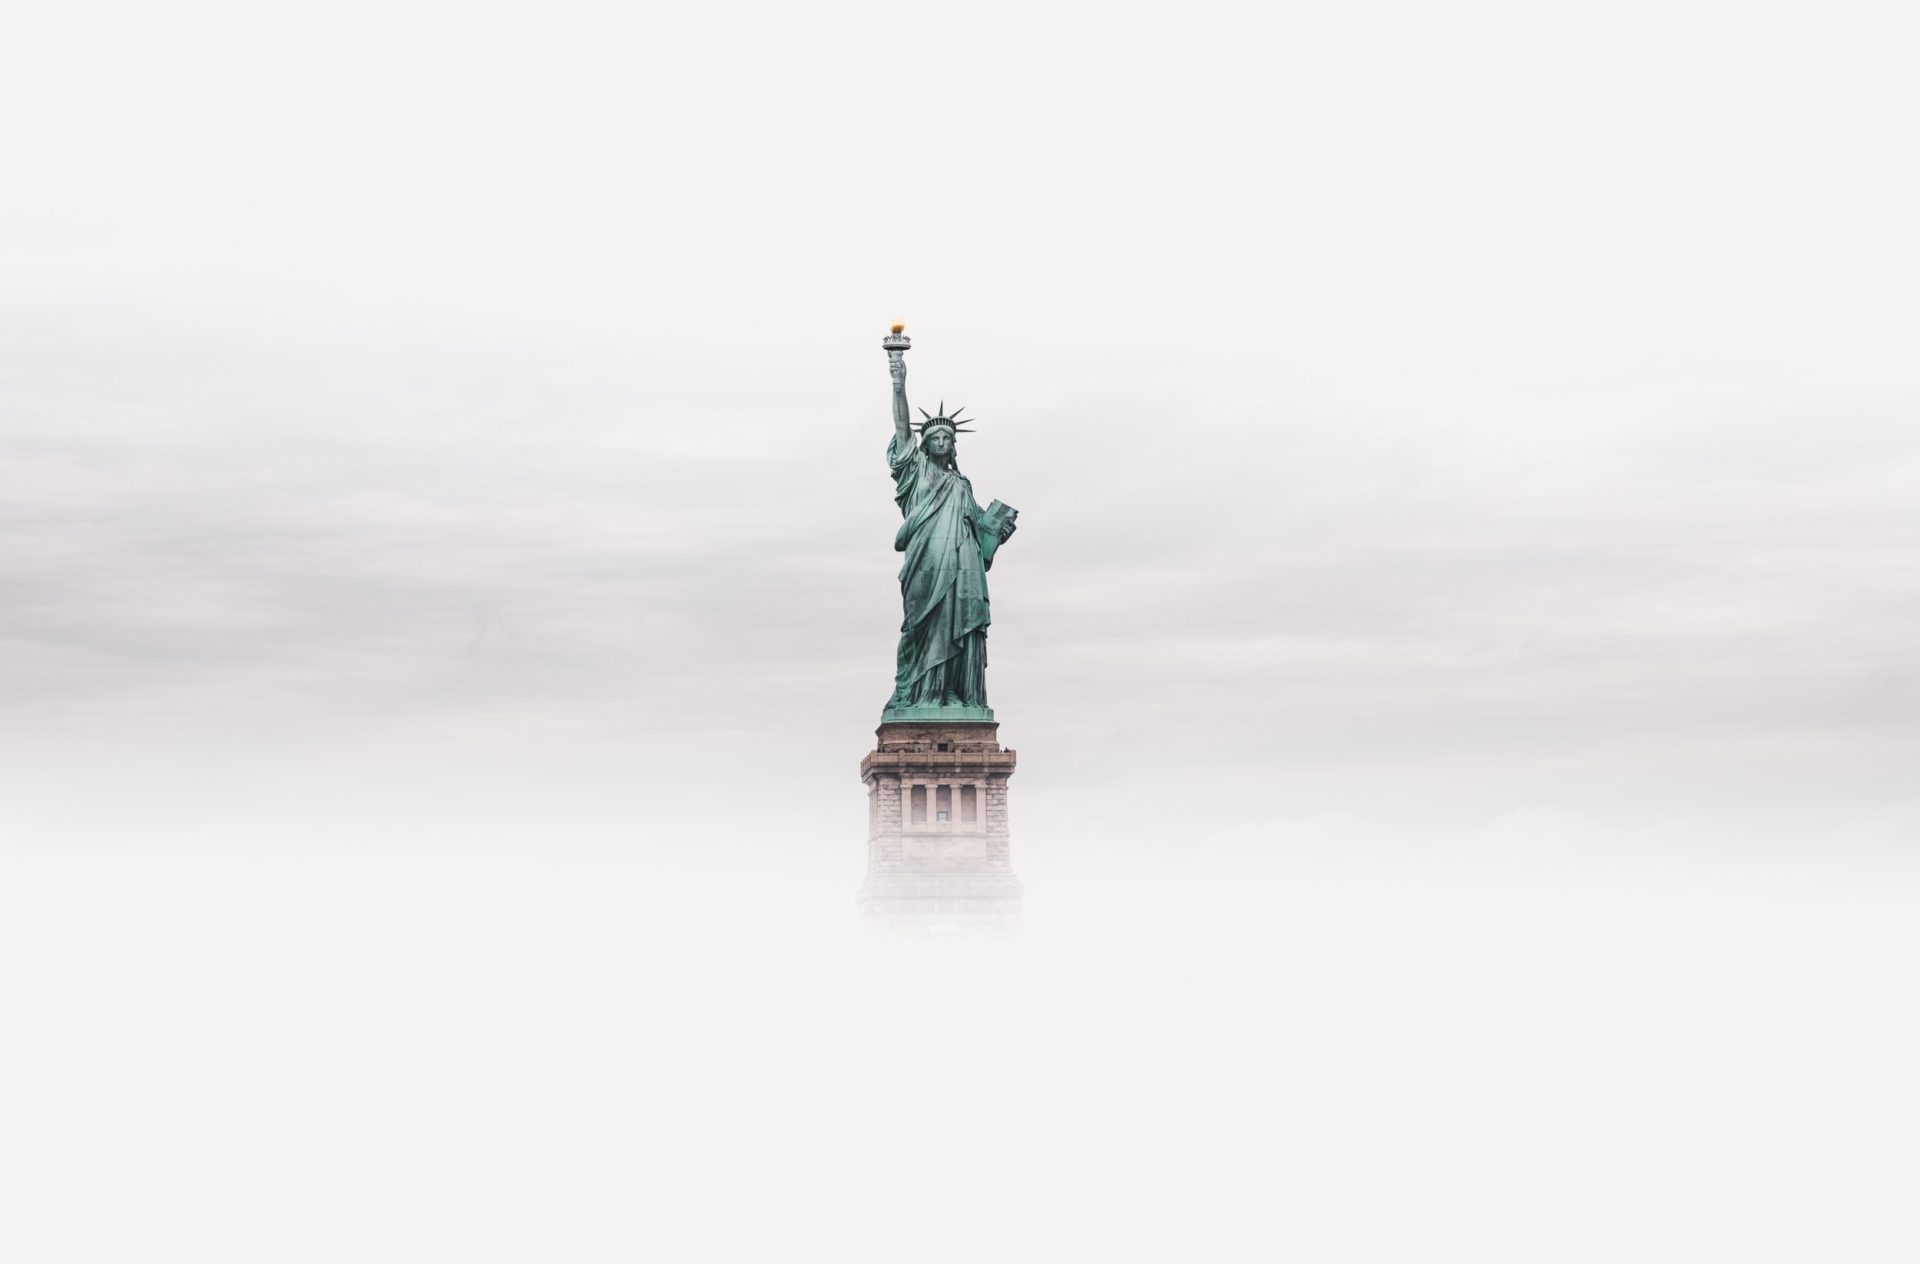 Statue of Liberty National Monument, New York, United States (Photo by Luke Stackpoole | Unsplash)